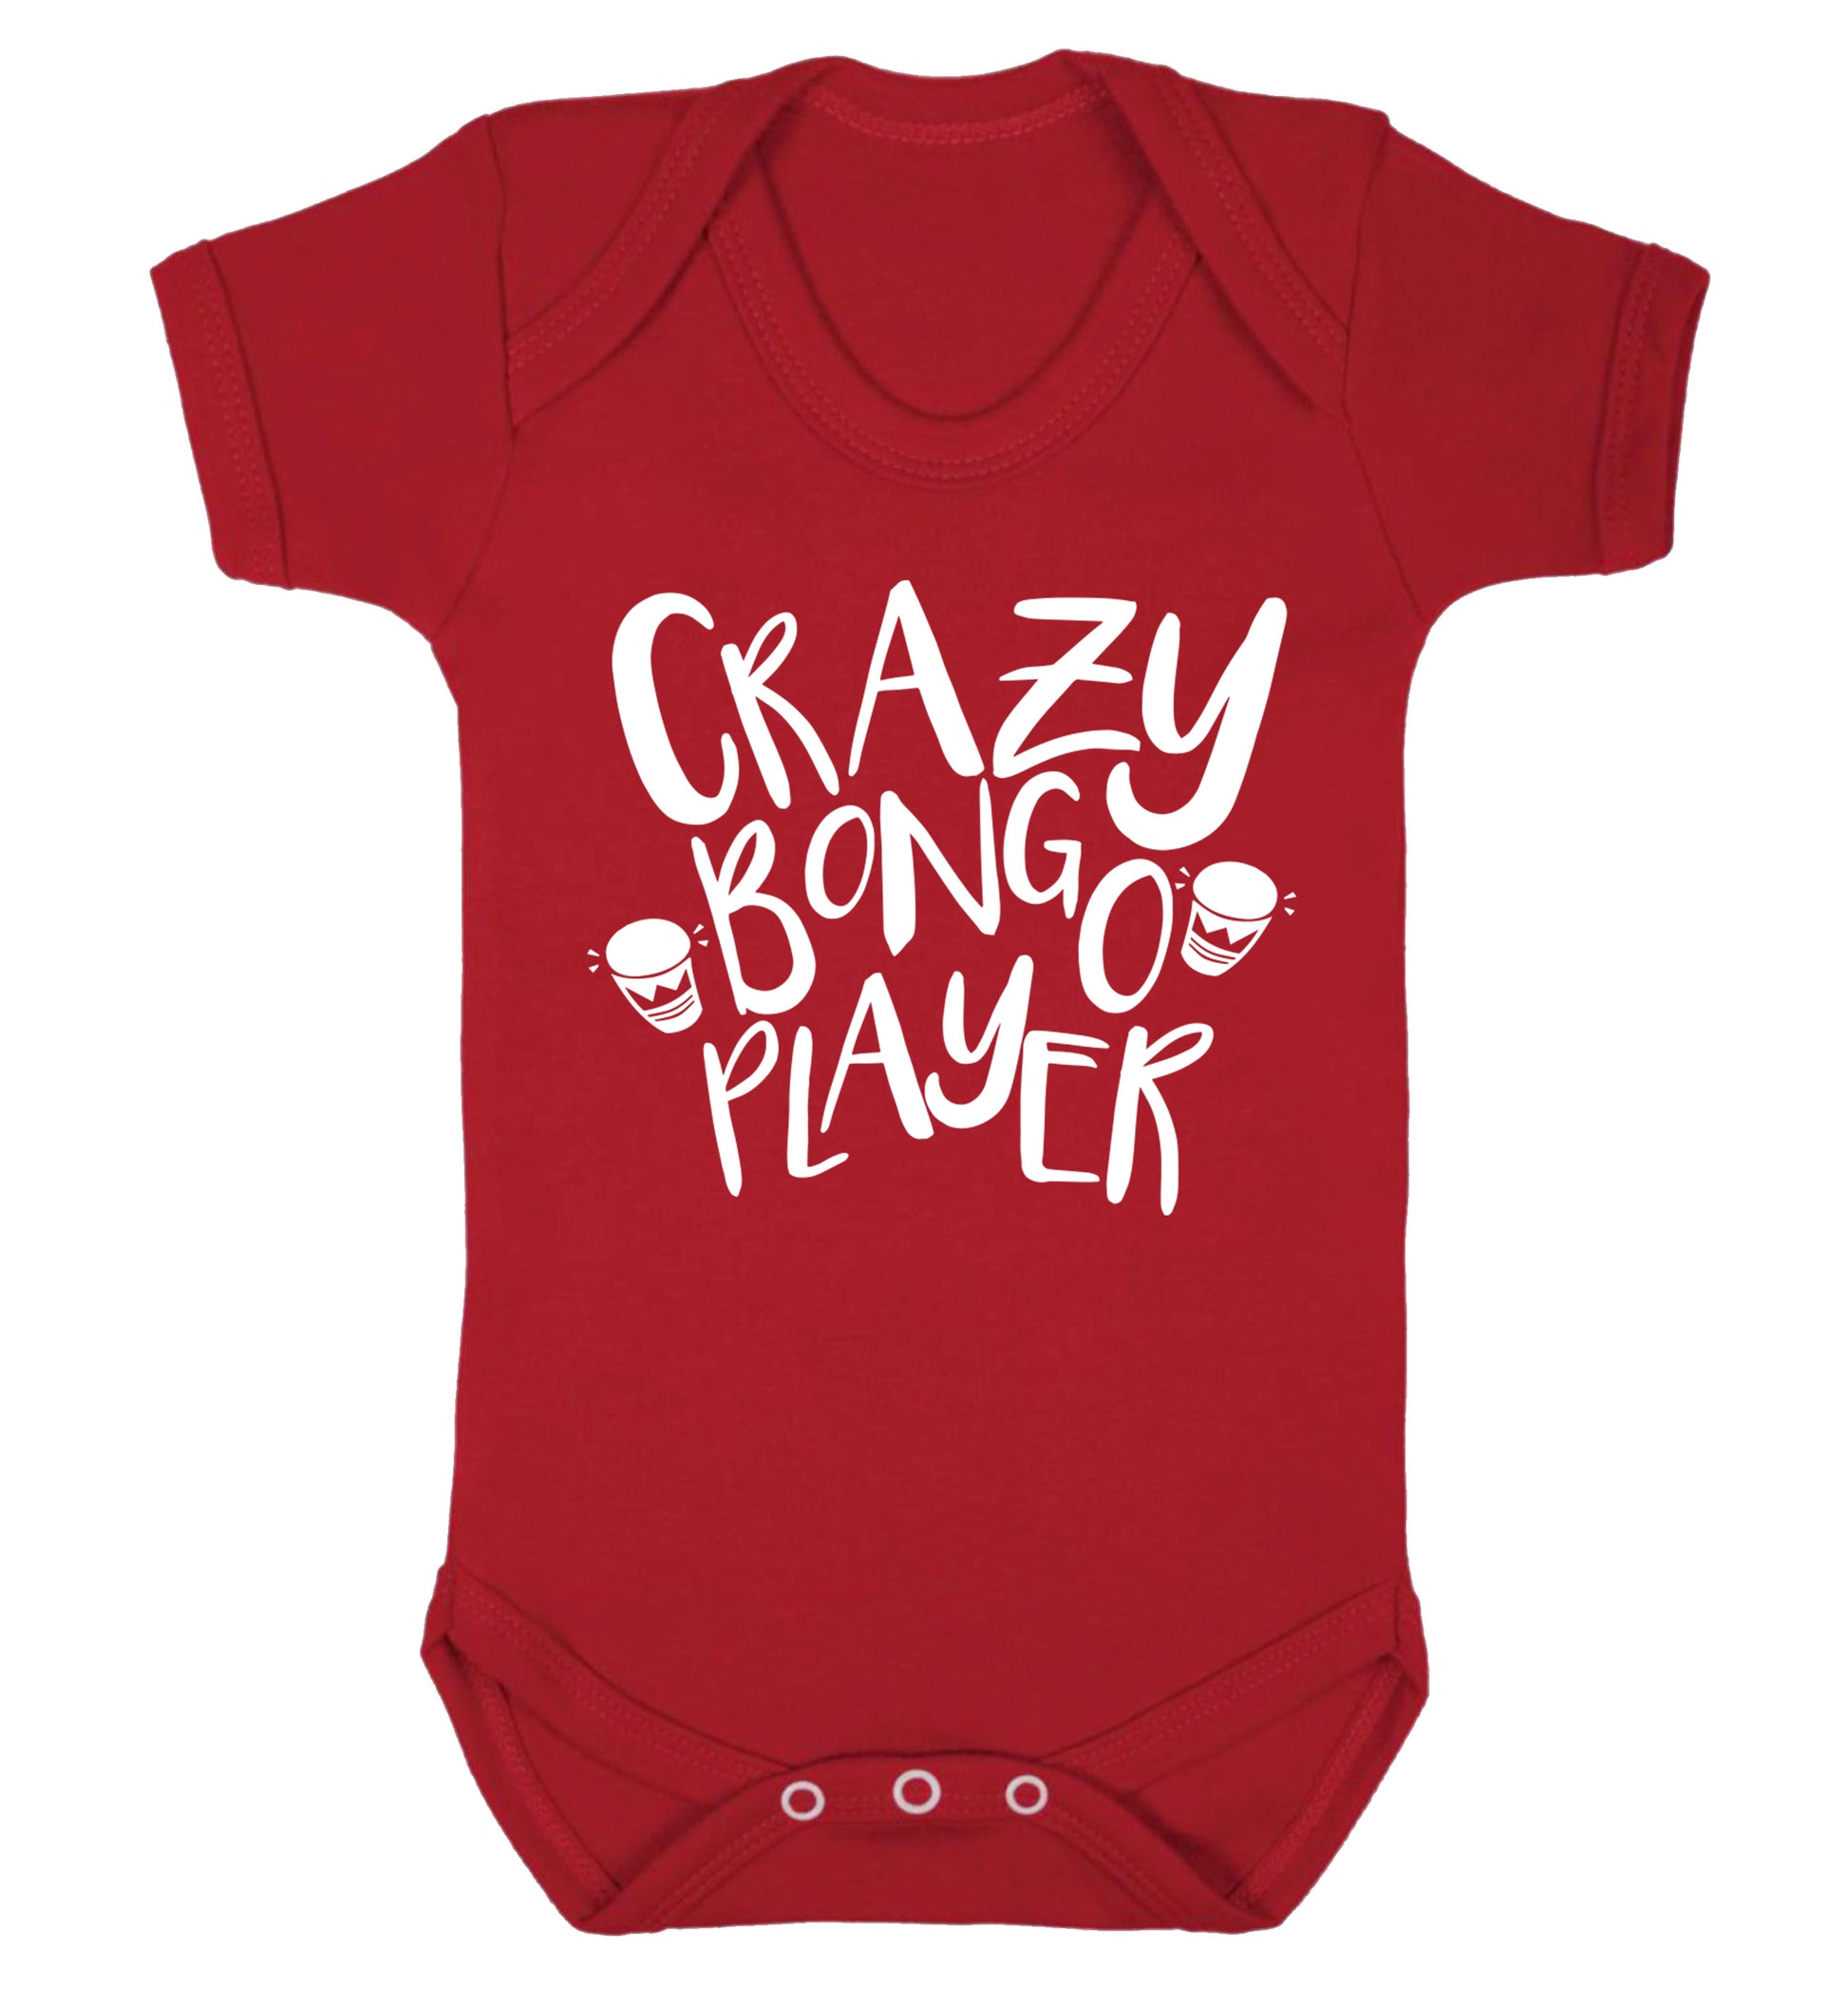 Crazy bongo player Baby Vest red 18-24 months